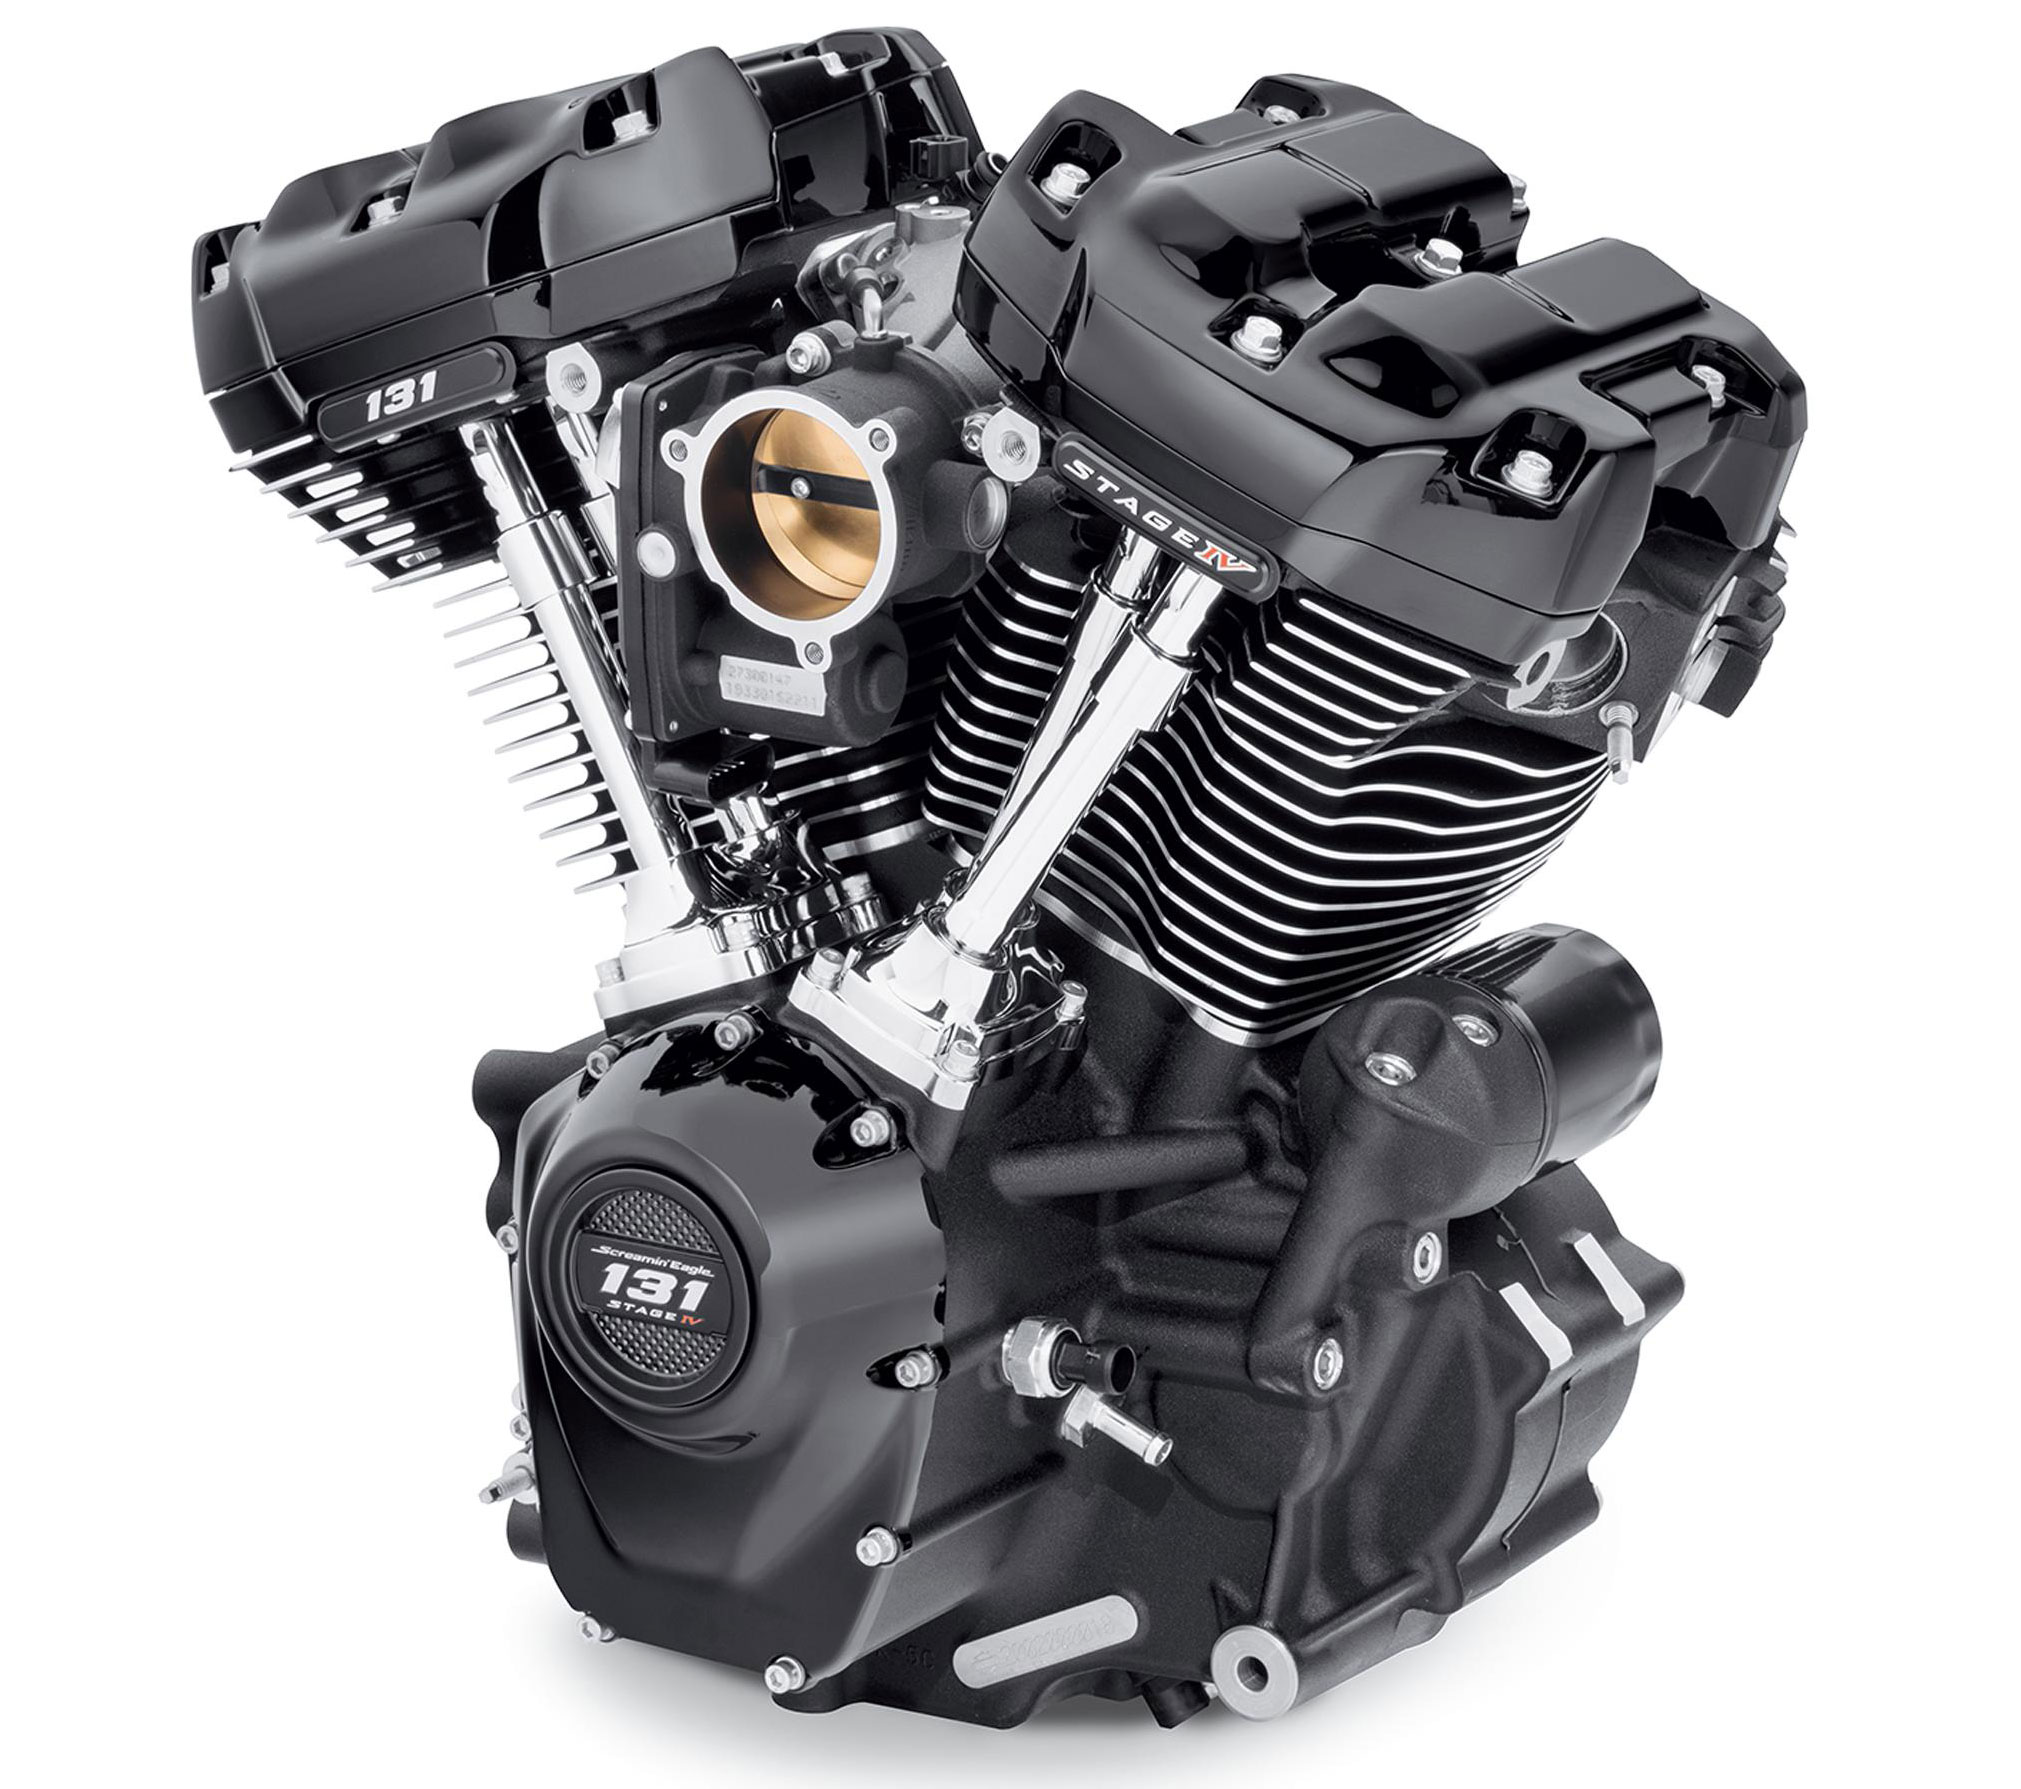 2021 Harley-Davidson Screamin' Eagle 131 Softail Engine Guide • Total ...